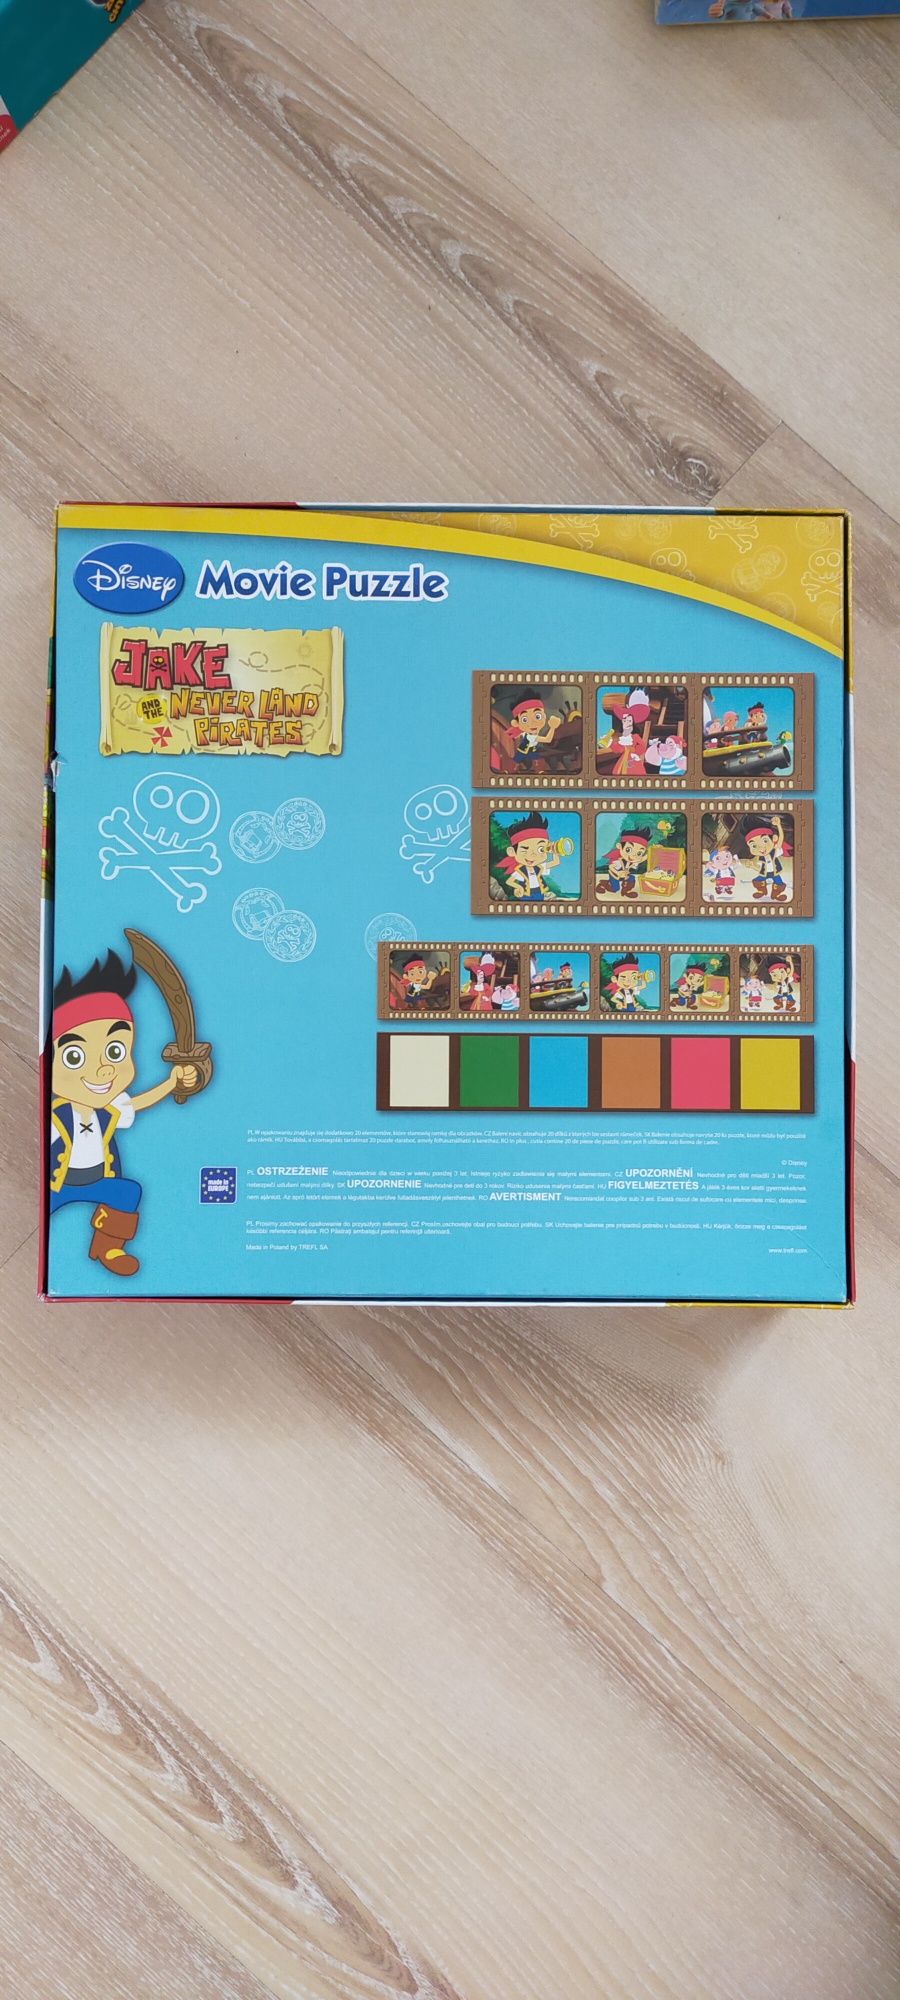 Sprzedam puzzle Jake i piraci z Neverland